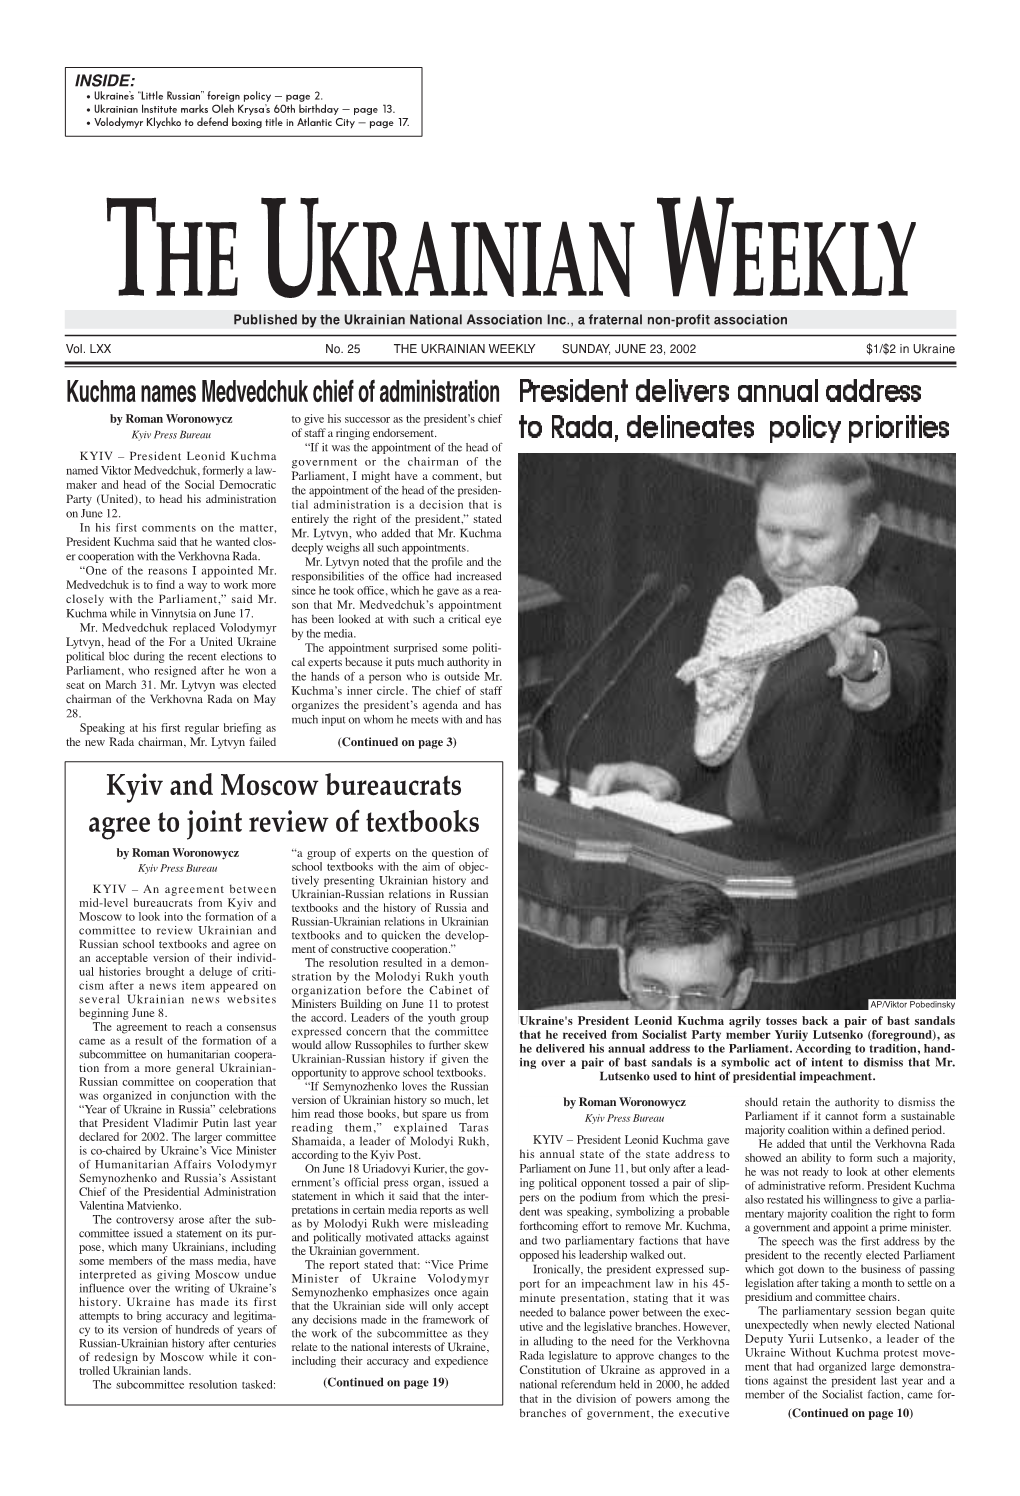 The Ukrainian Weekly 2002, No.25